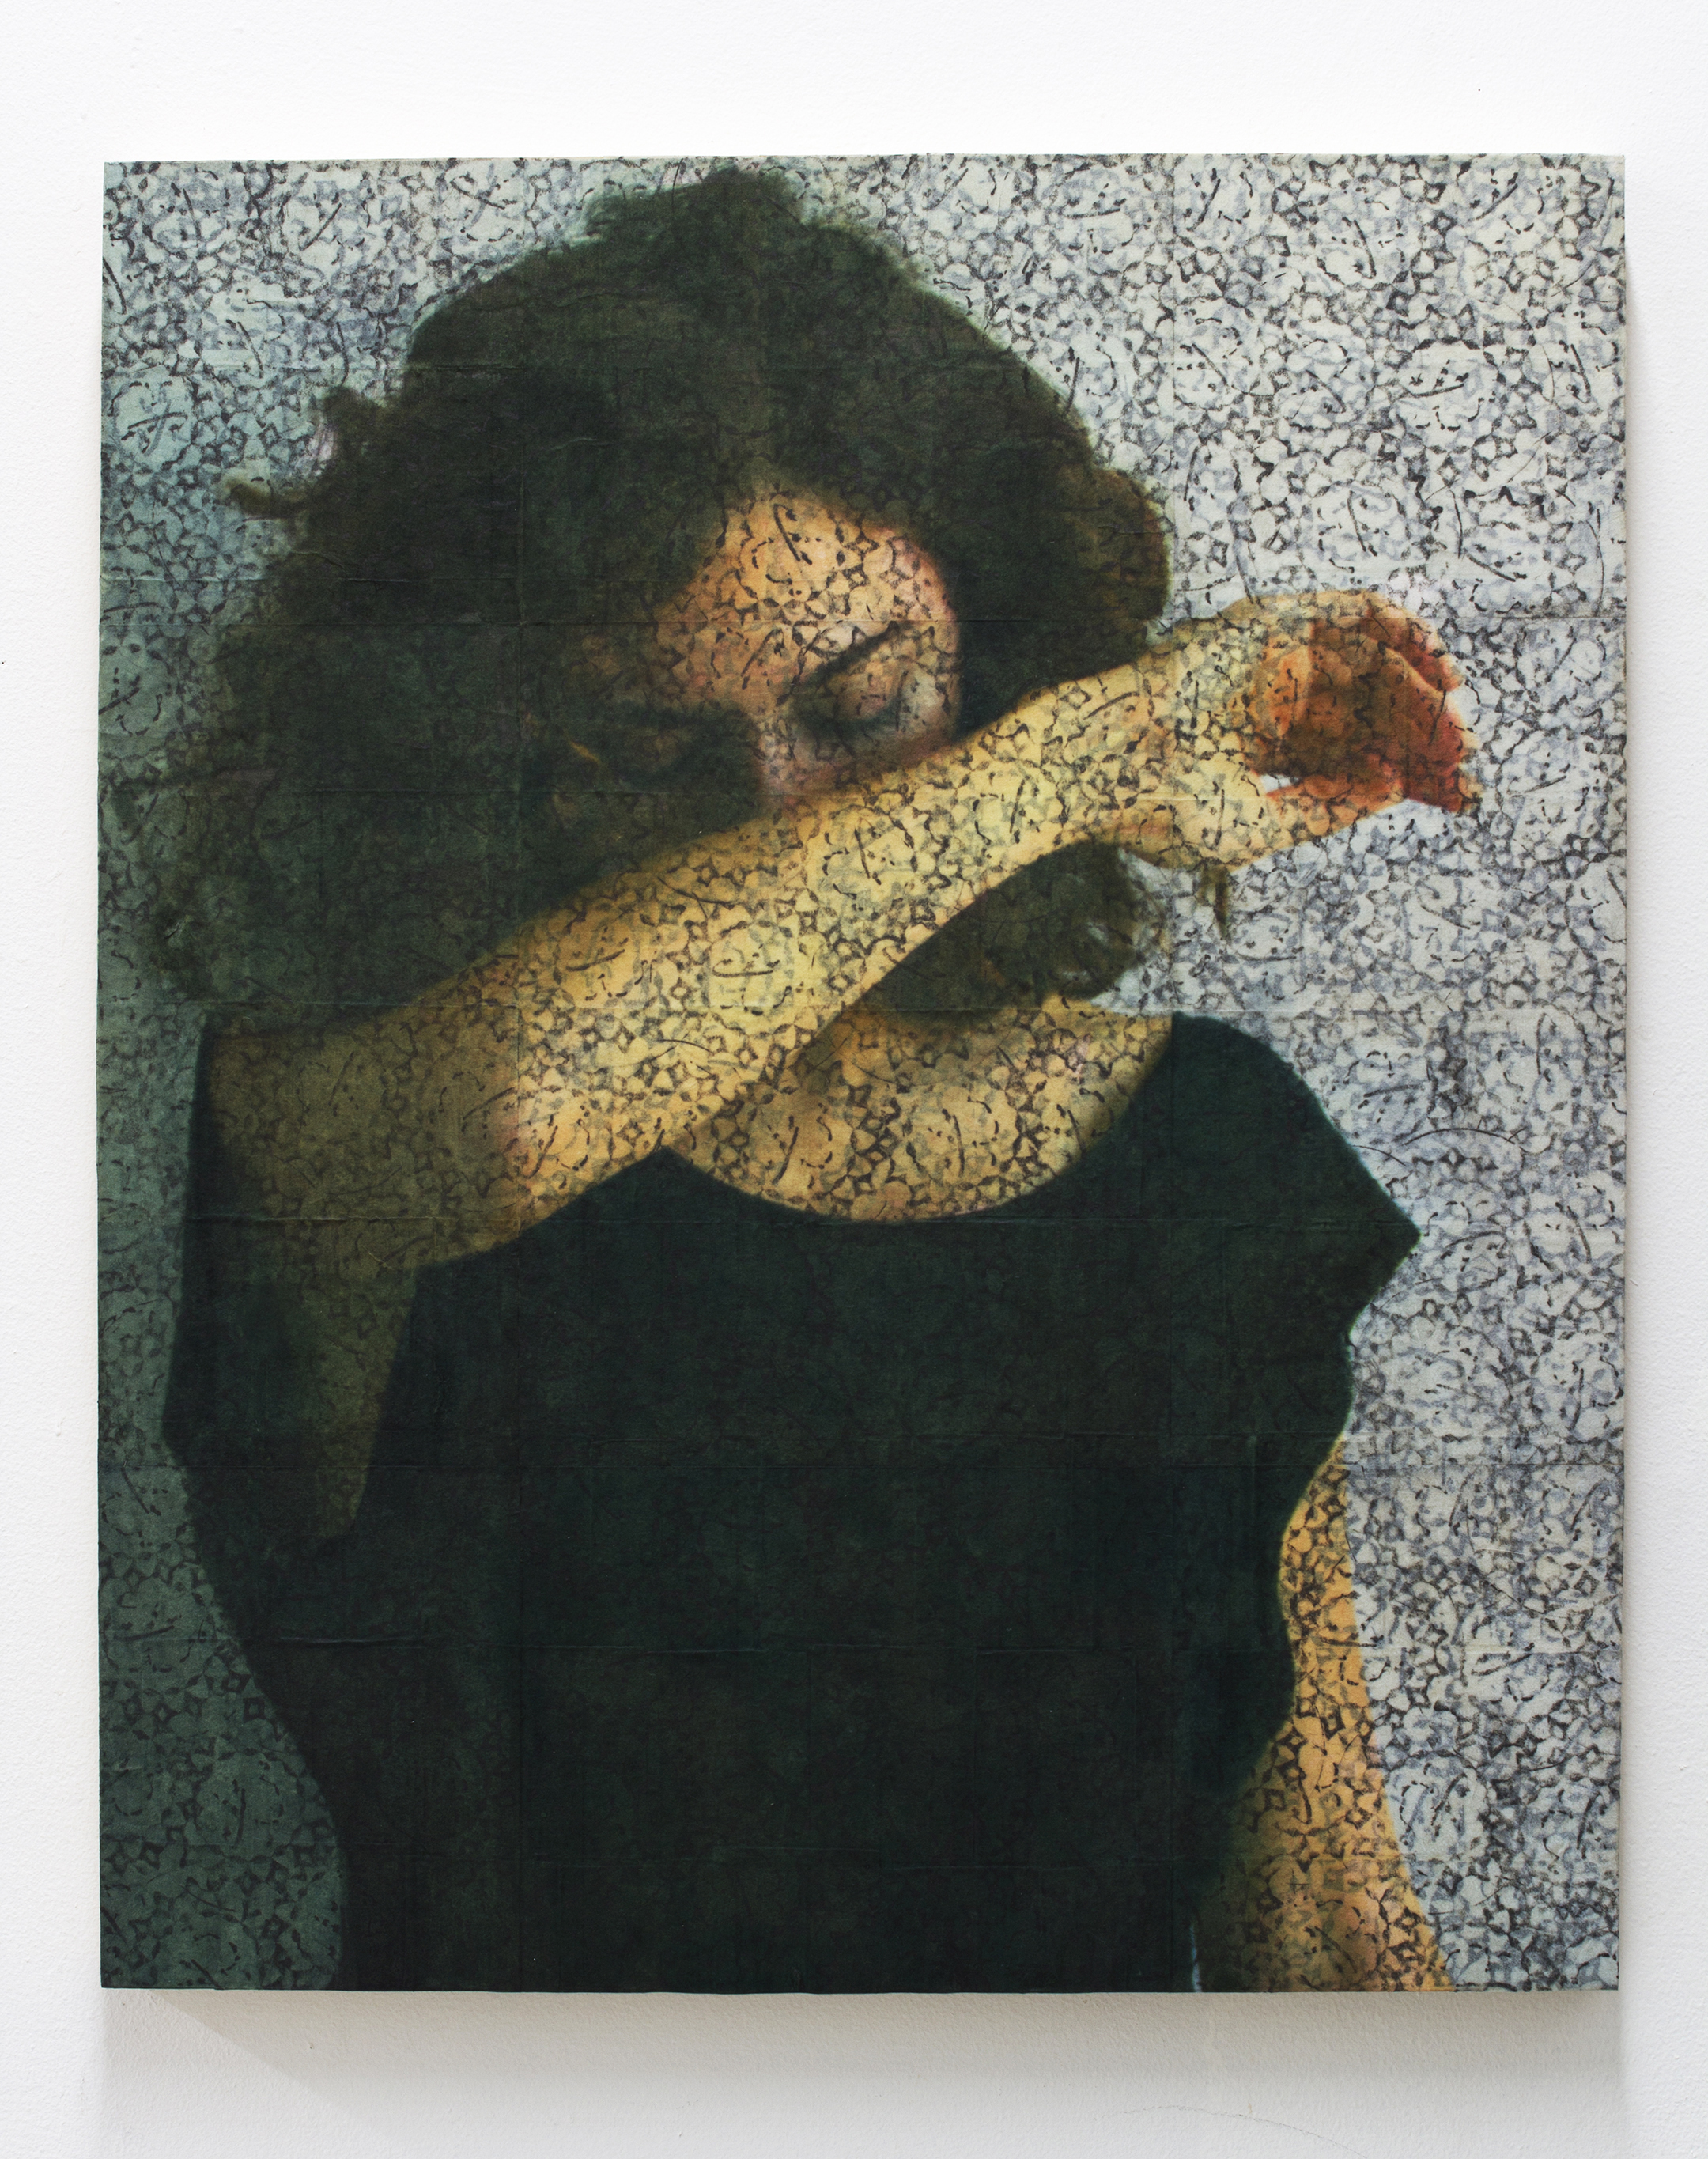  Mohr Portrait 2015 - 6 - Sepideh Salehi - 20x24 